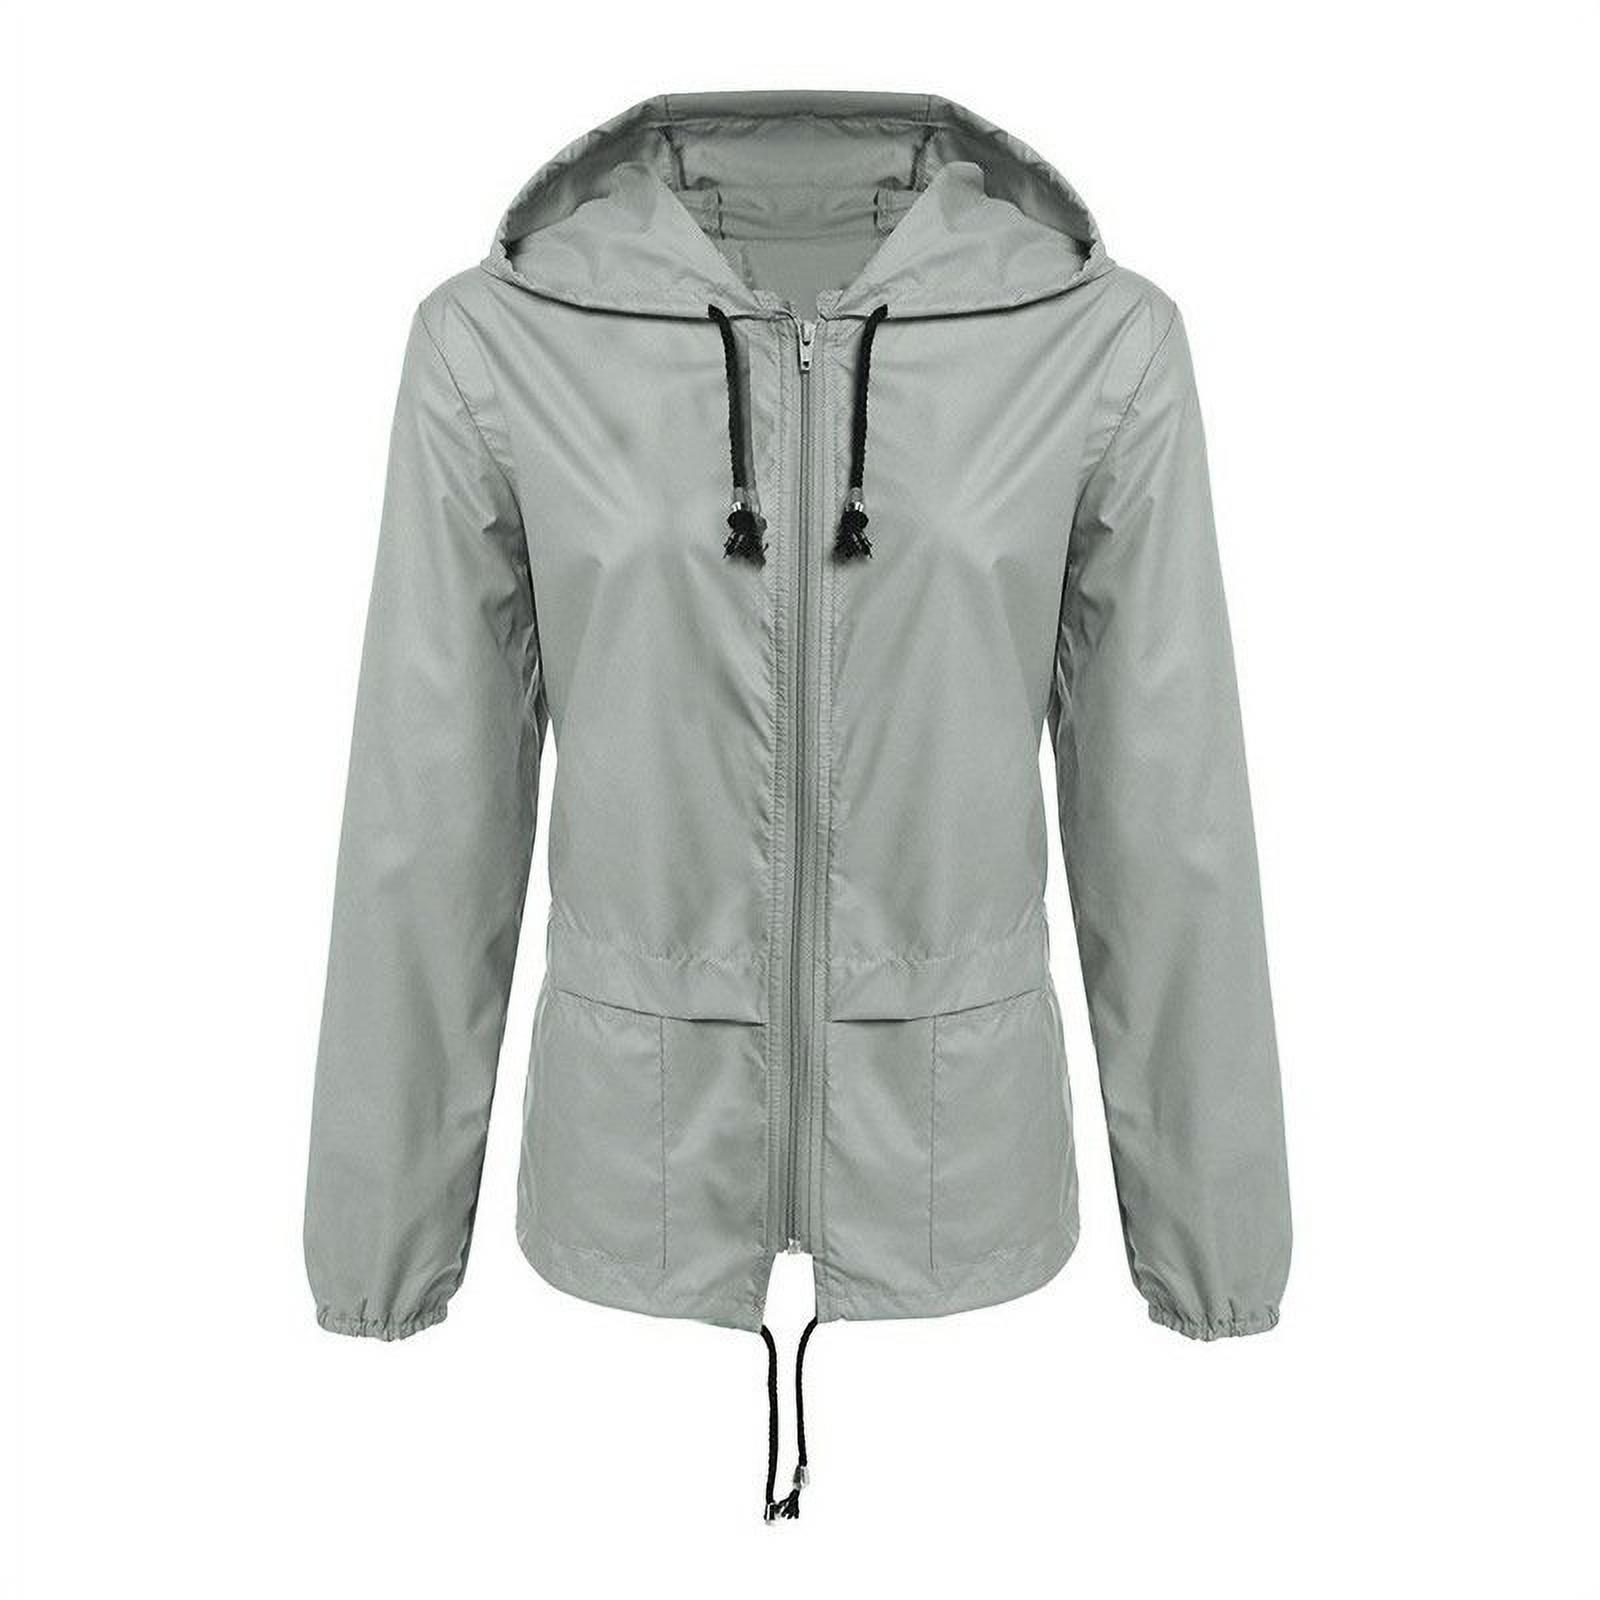 Fashion Thin Section Ladies Waterproof Clothing Hooded Drawstring Outdoor Hiking Rain Jacket Jacket - image 5 of 7